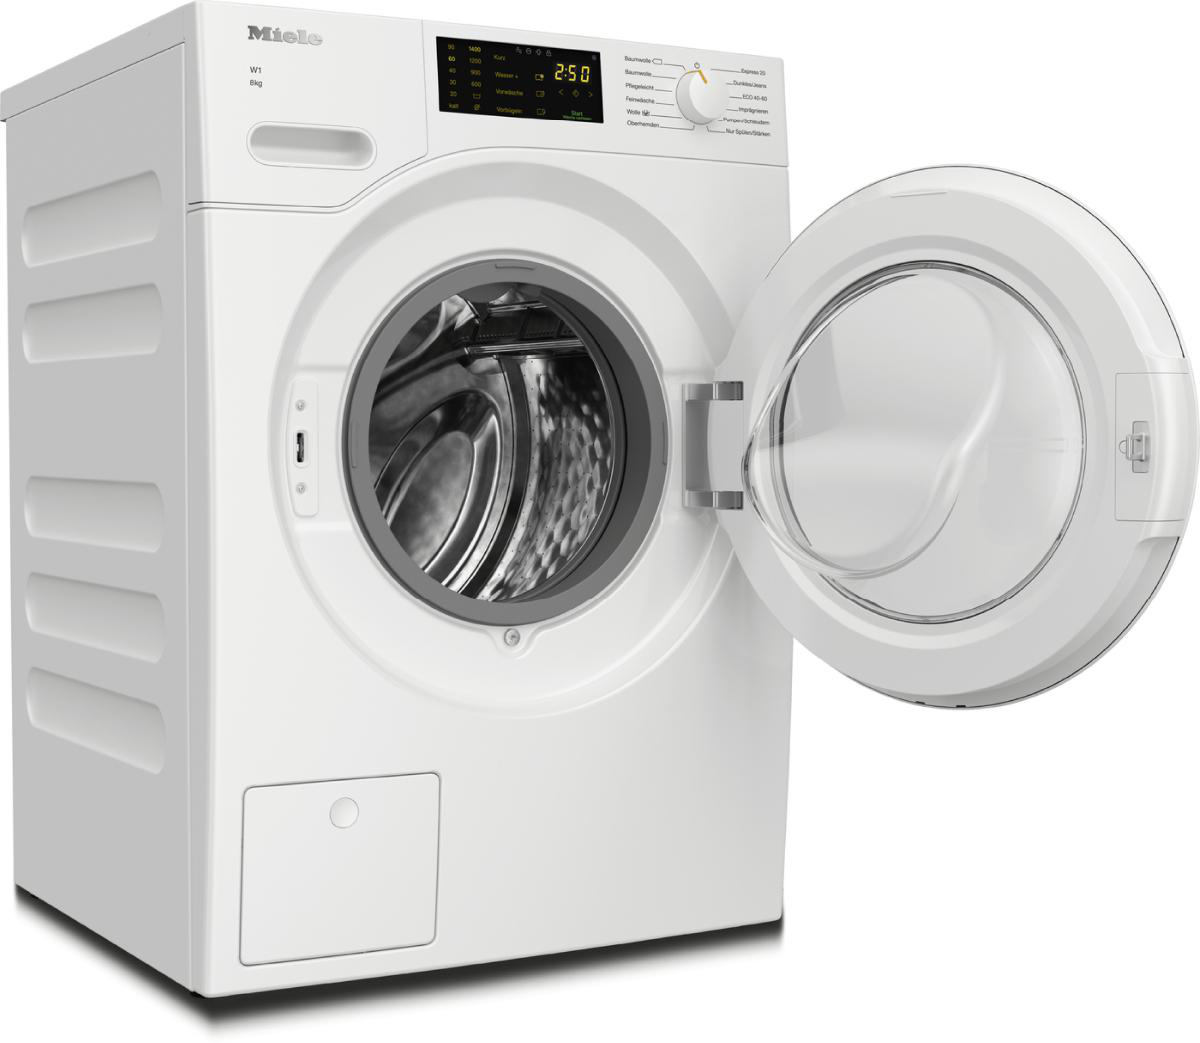 Flusenfilter kg, MIELE Waschmaschine U/Min., WWD120 WPS (8 Fremdkörperfilter) 8kg W1 A, White Edition 1400